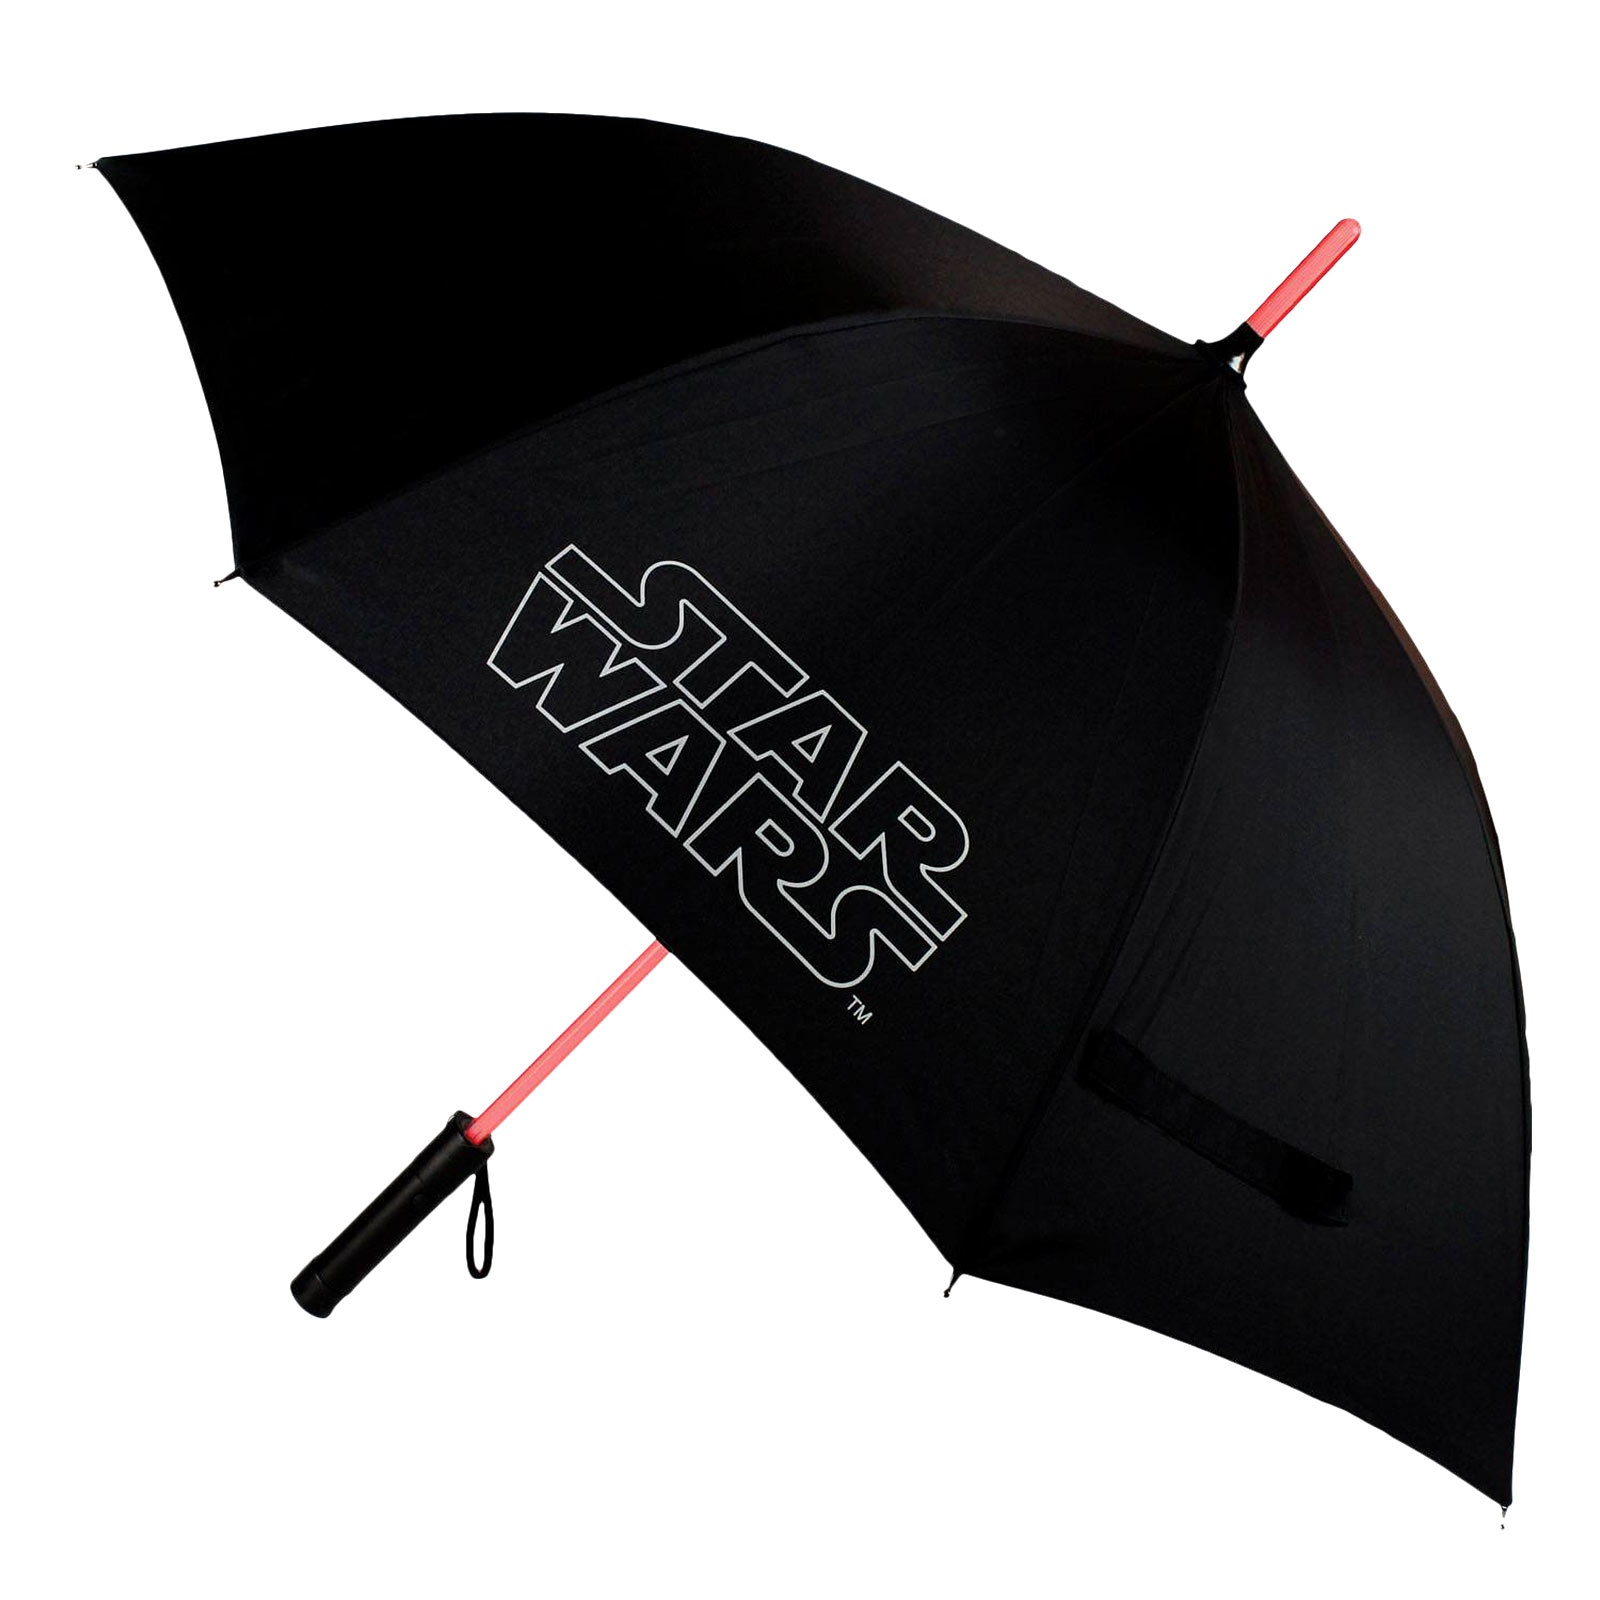 Star Wars - Lightsaber Umbrella with LED Light Function